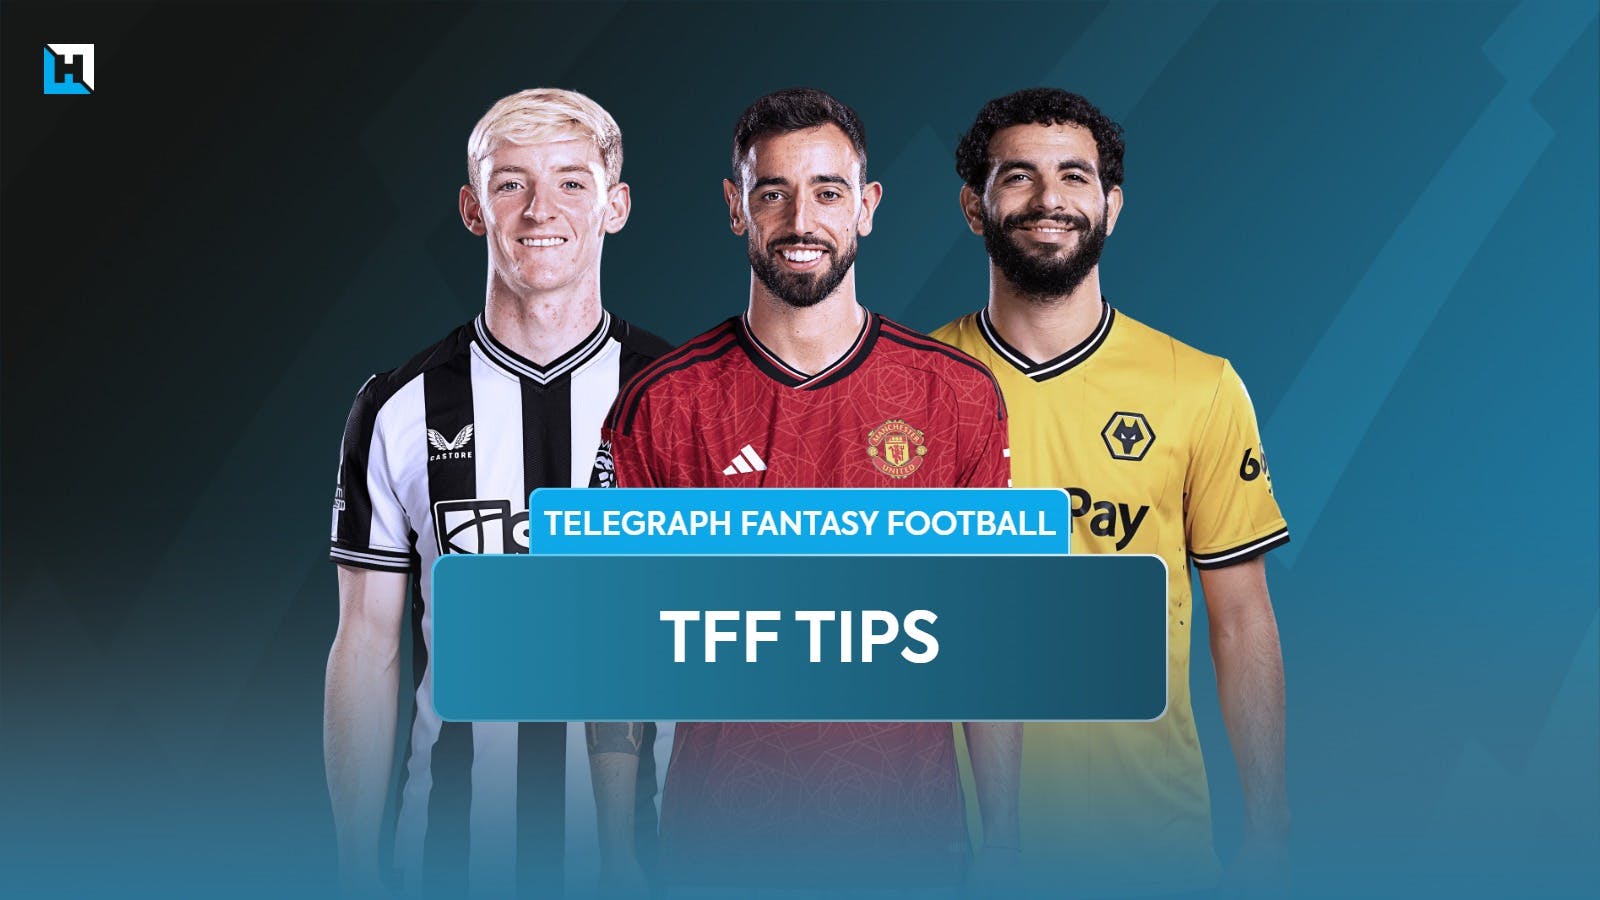 Paul McAnulty’s Telegraph Fantasy Football tips for the season run-in